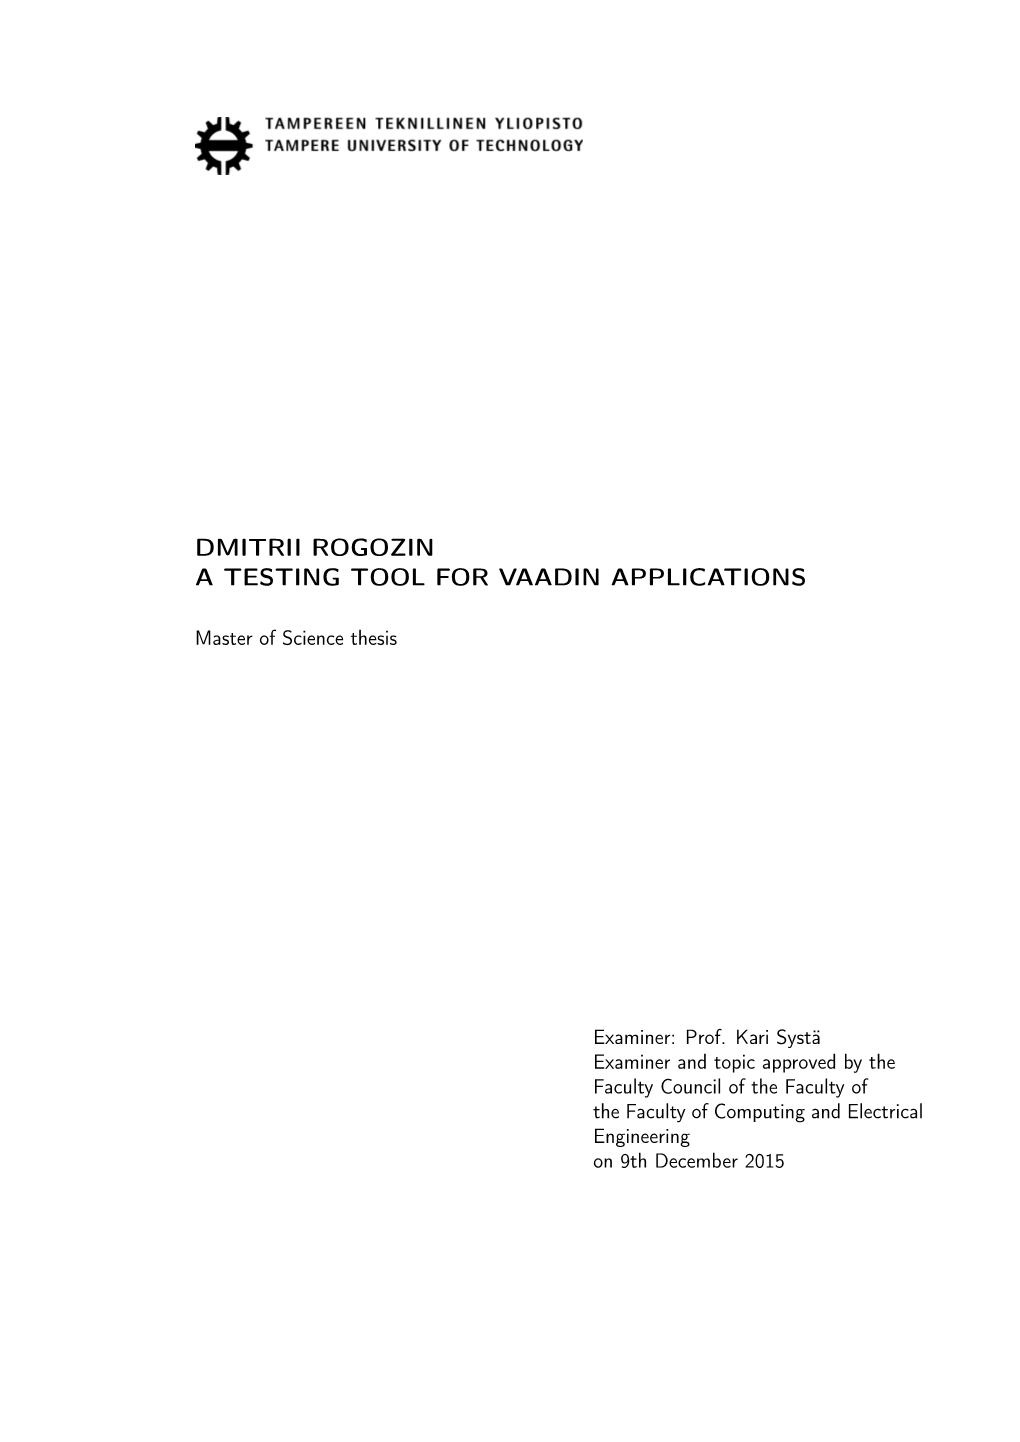 Dmitrii Rogozin a Testing Tool for Vaadin Applications